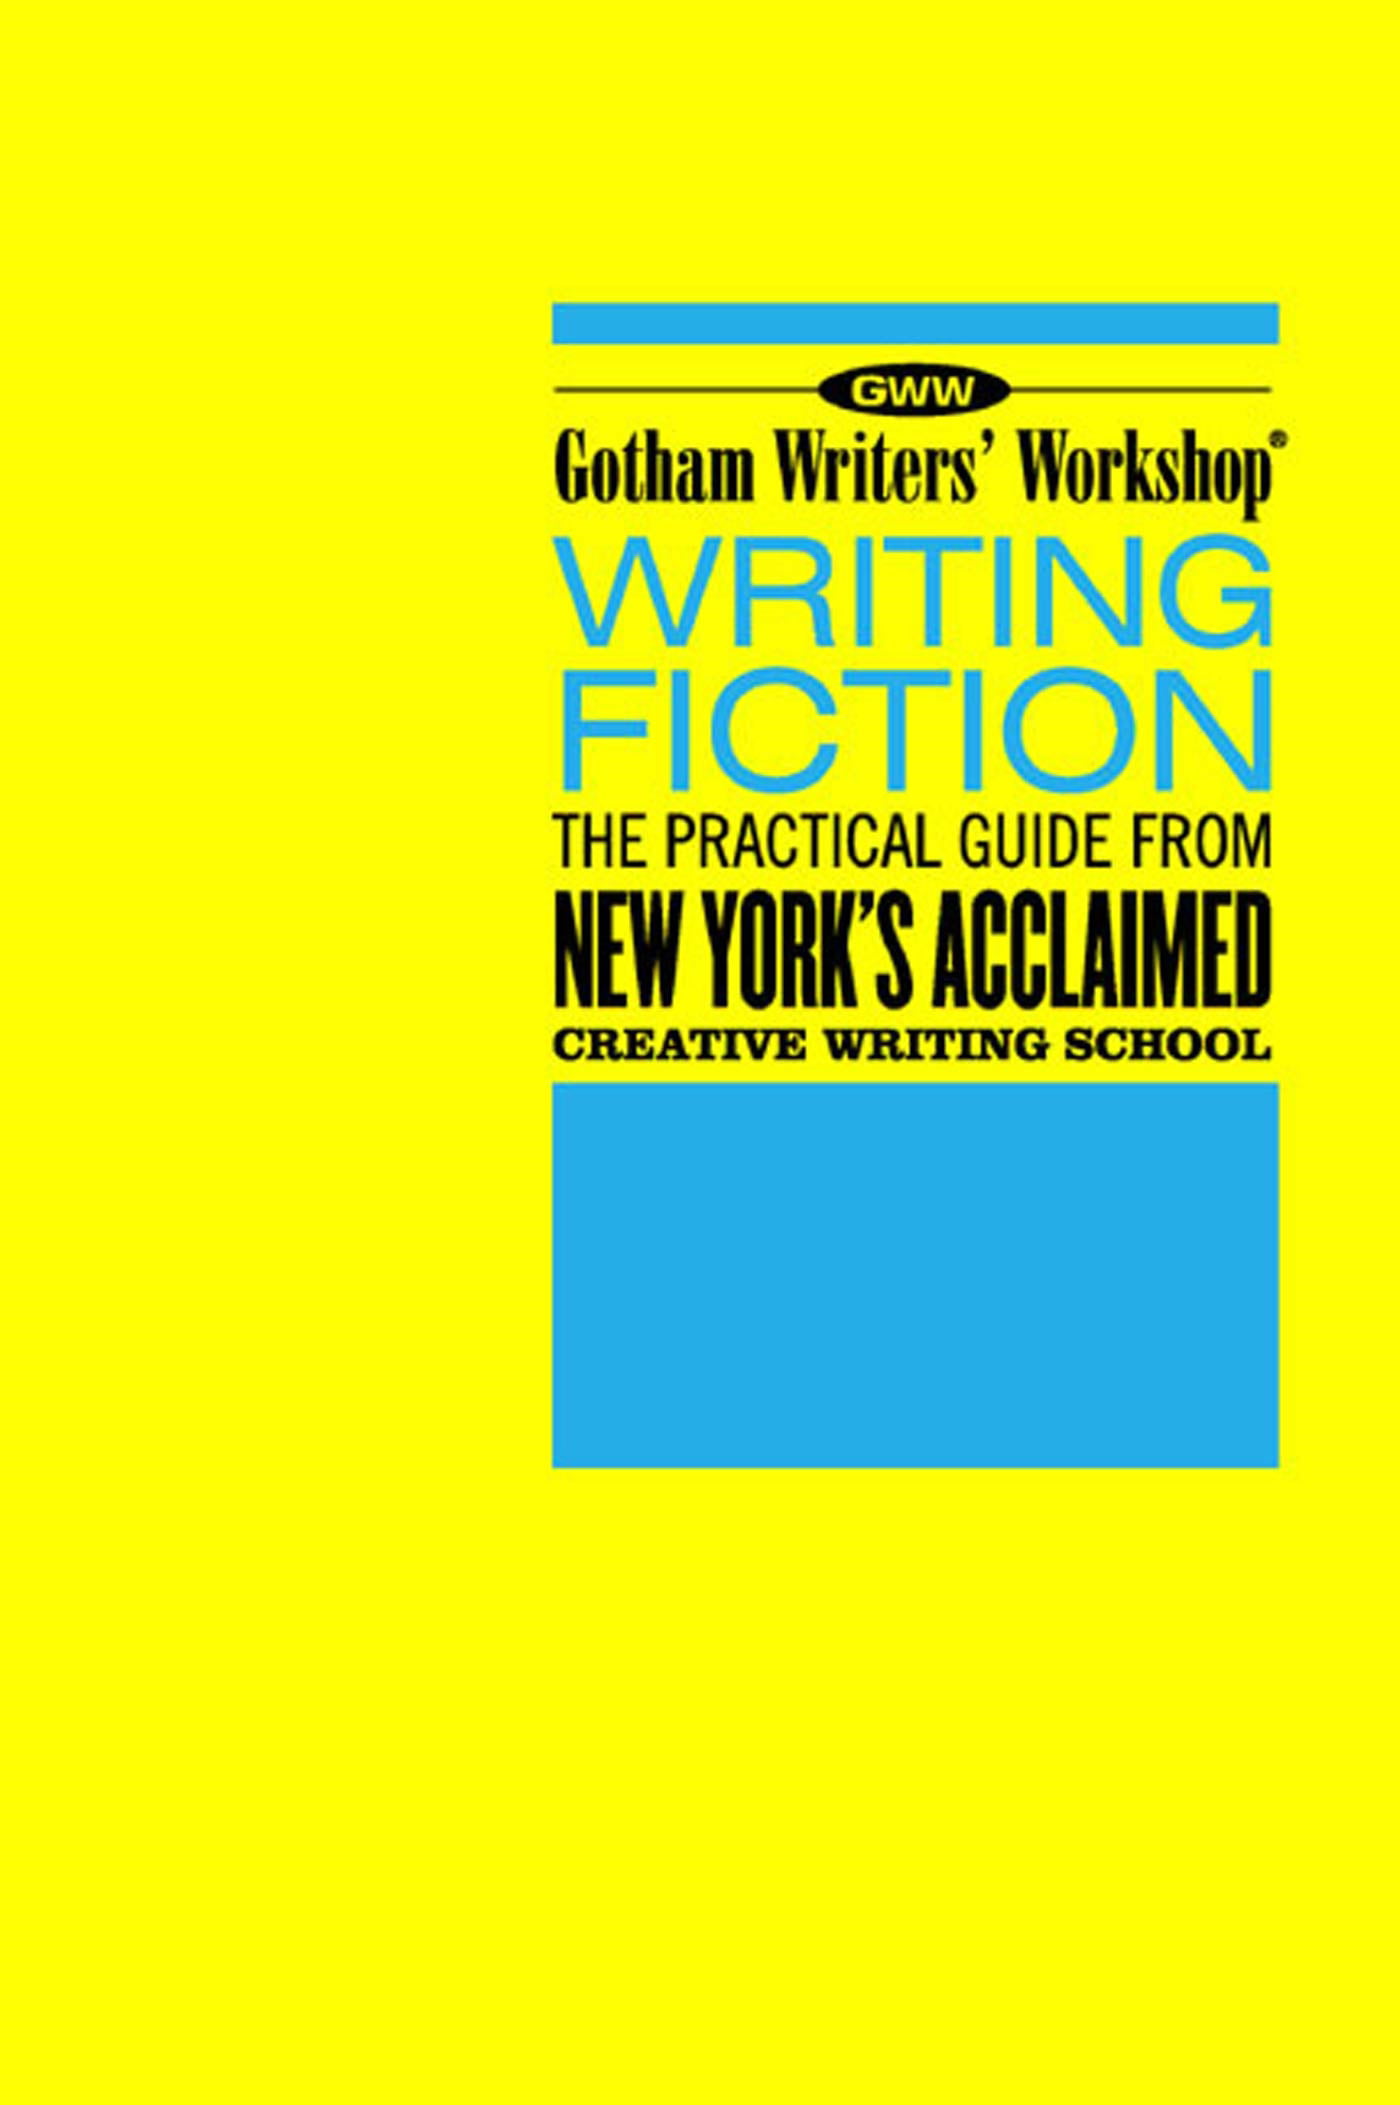 gotham writers online writing classes